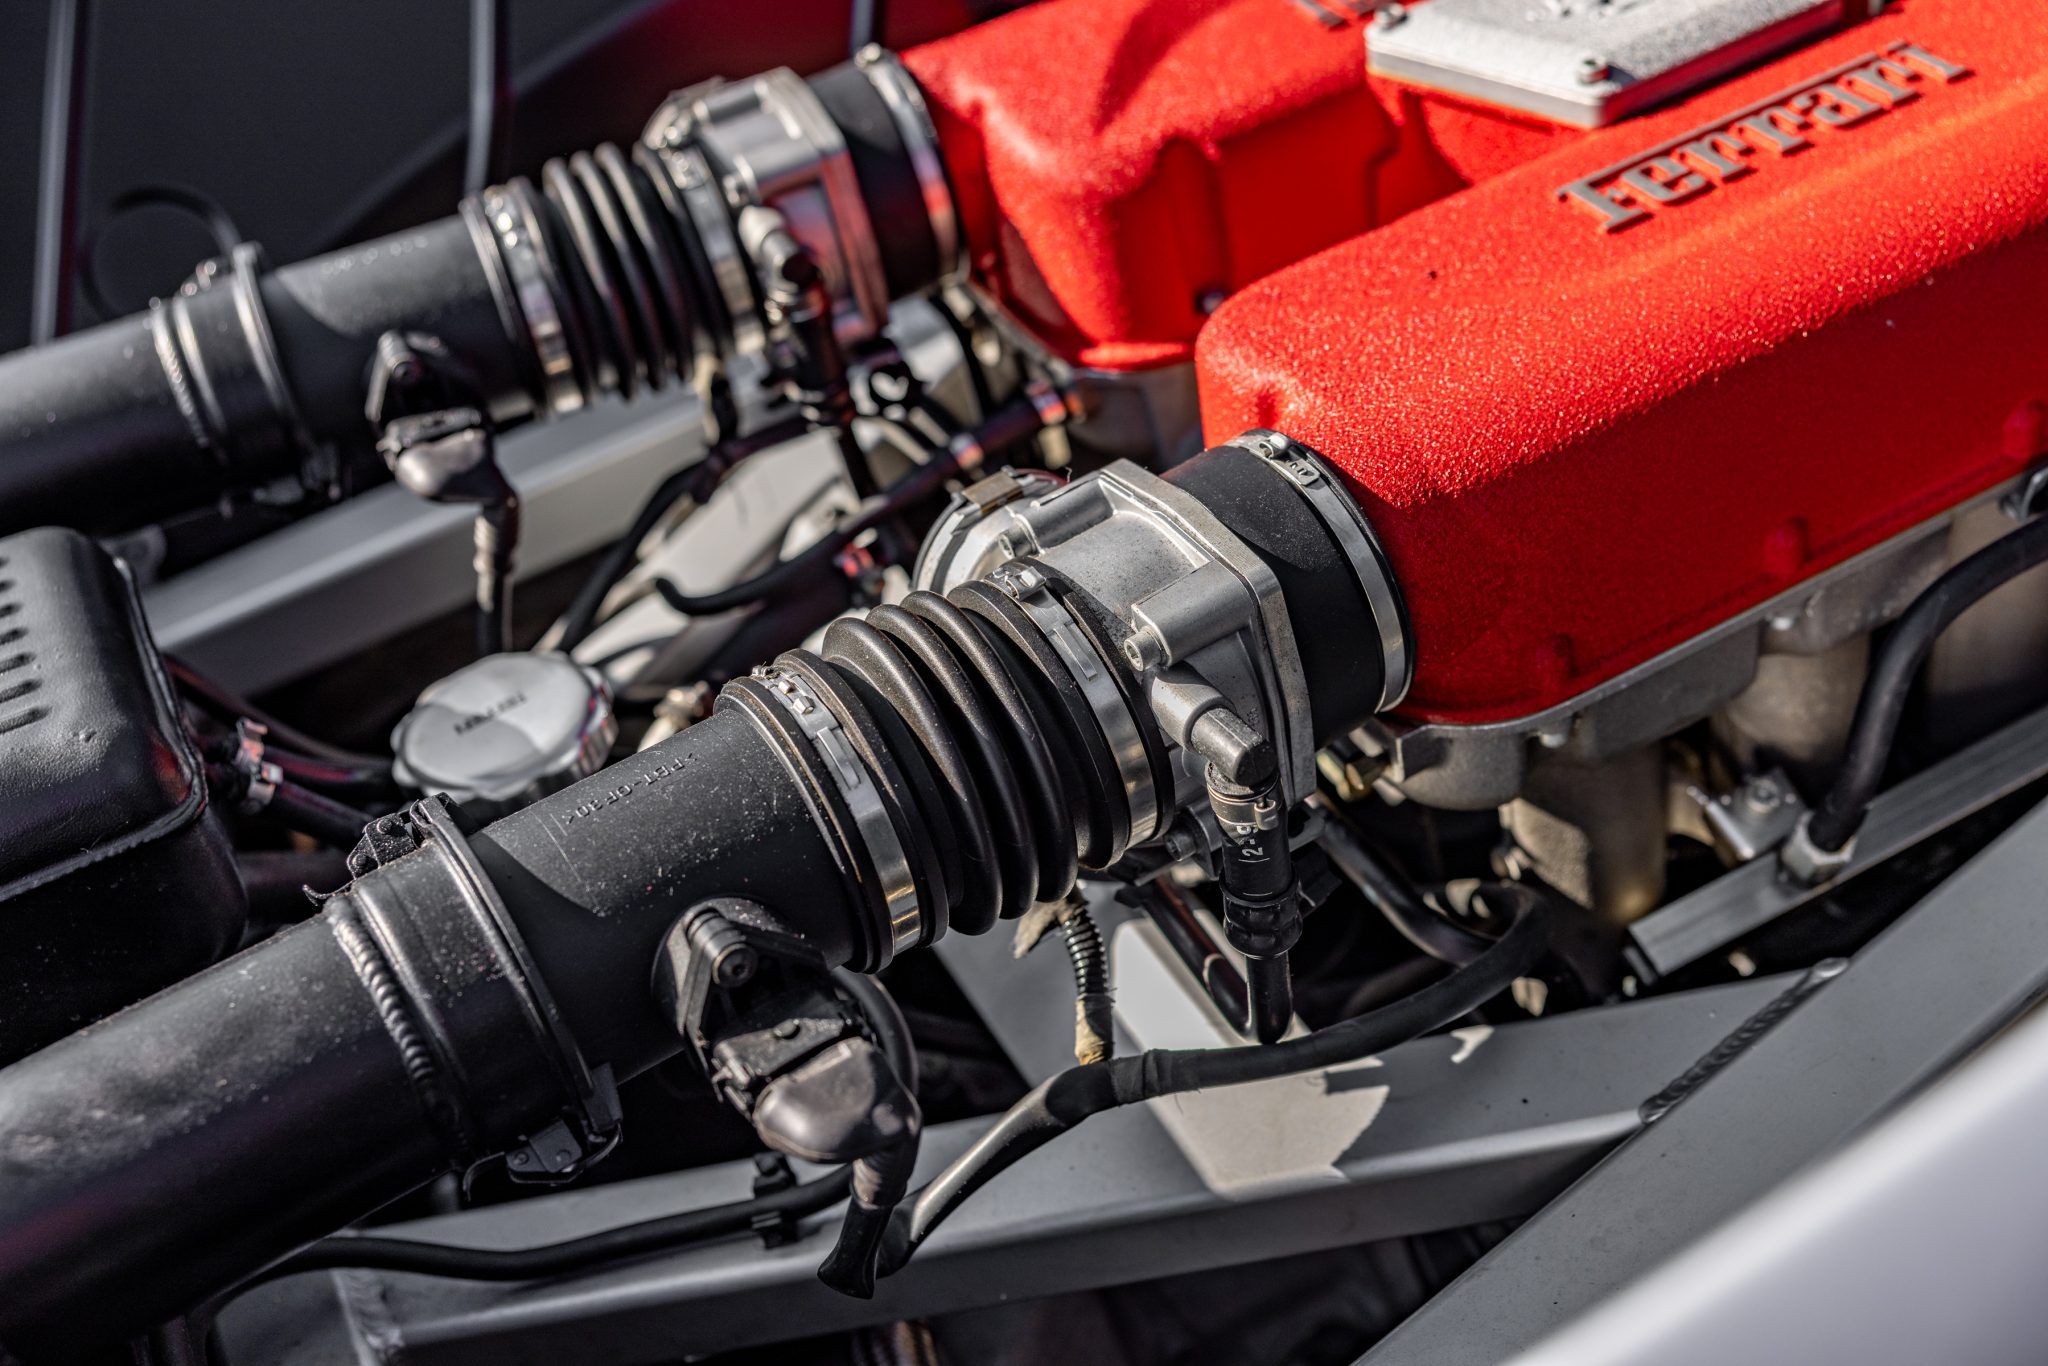 360 Modena engine detail